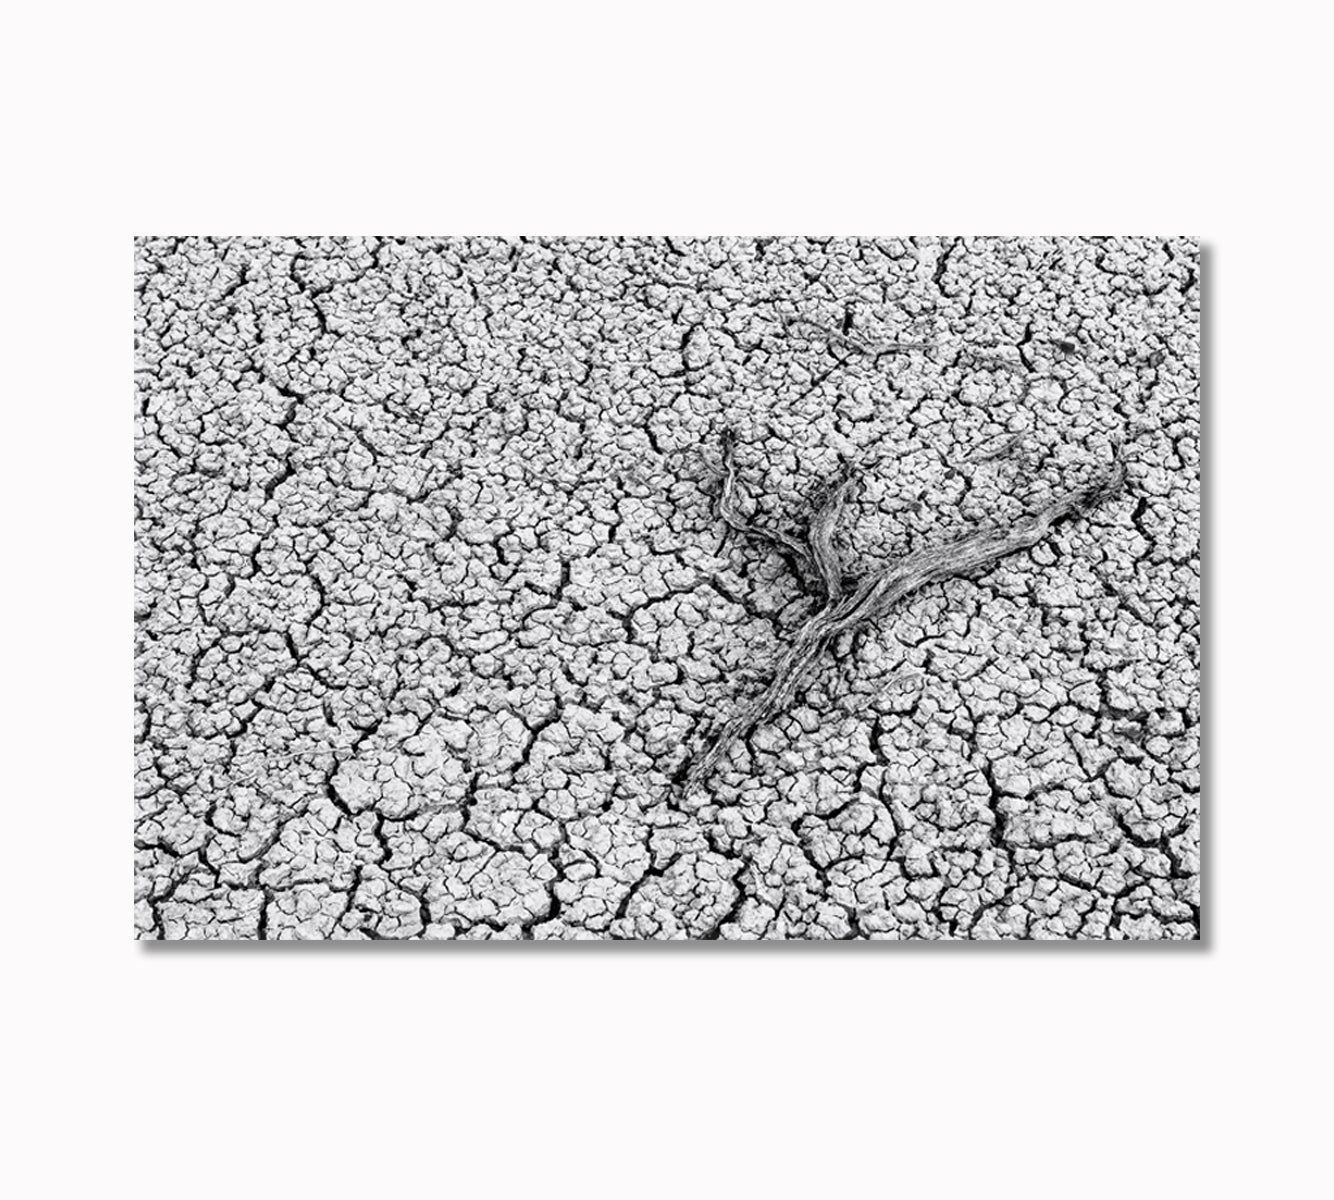 Dry Branch on Cracked Ground Canvas Print-Canvas Print-CetArt-1 Panel-24x16 inches-CetArt